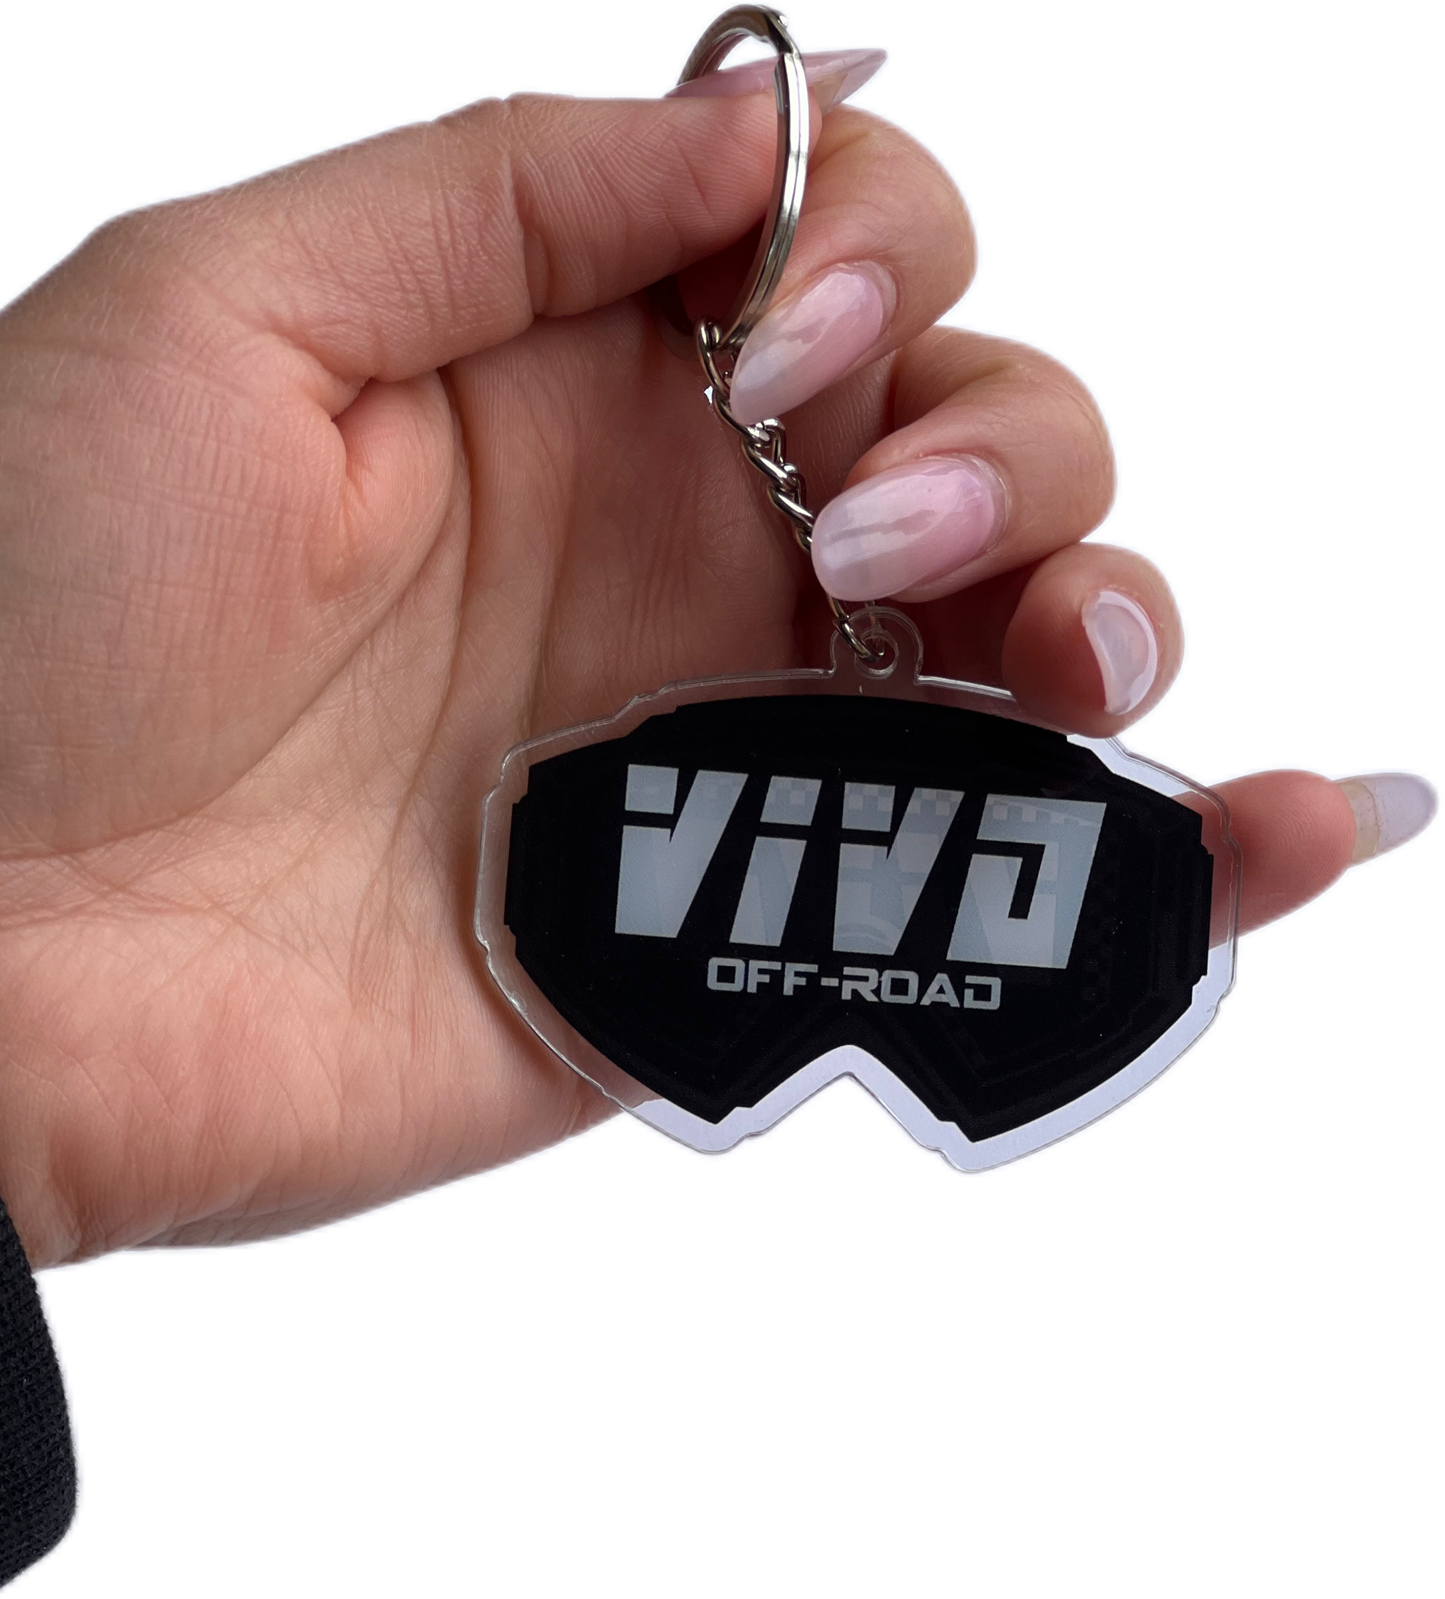 Vivo Off-road Keychain